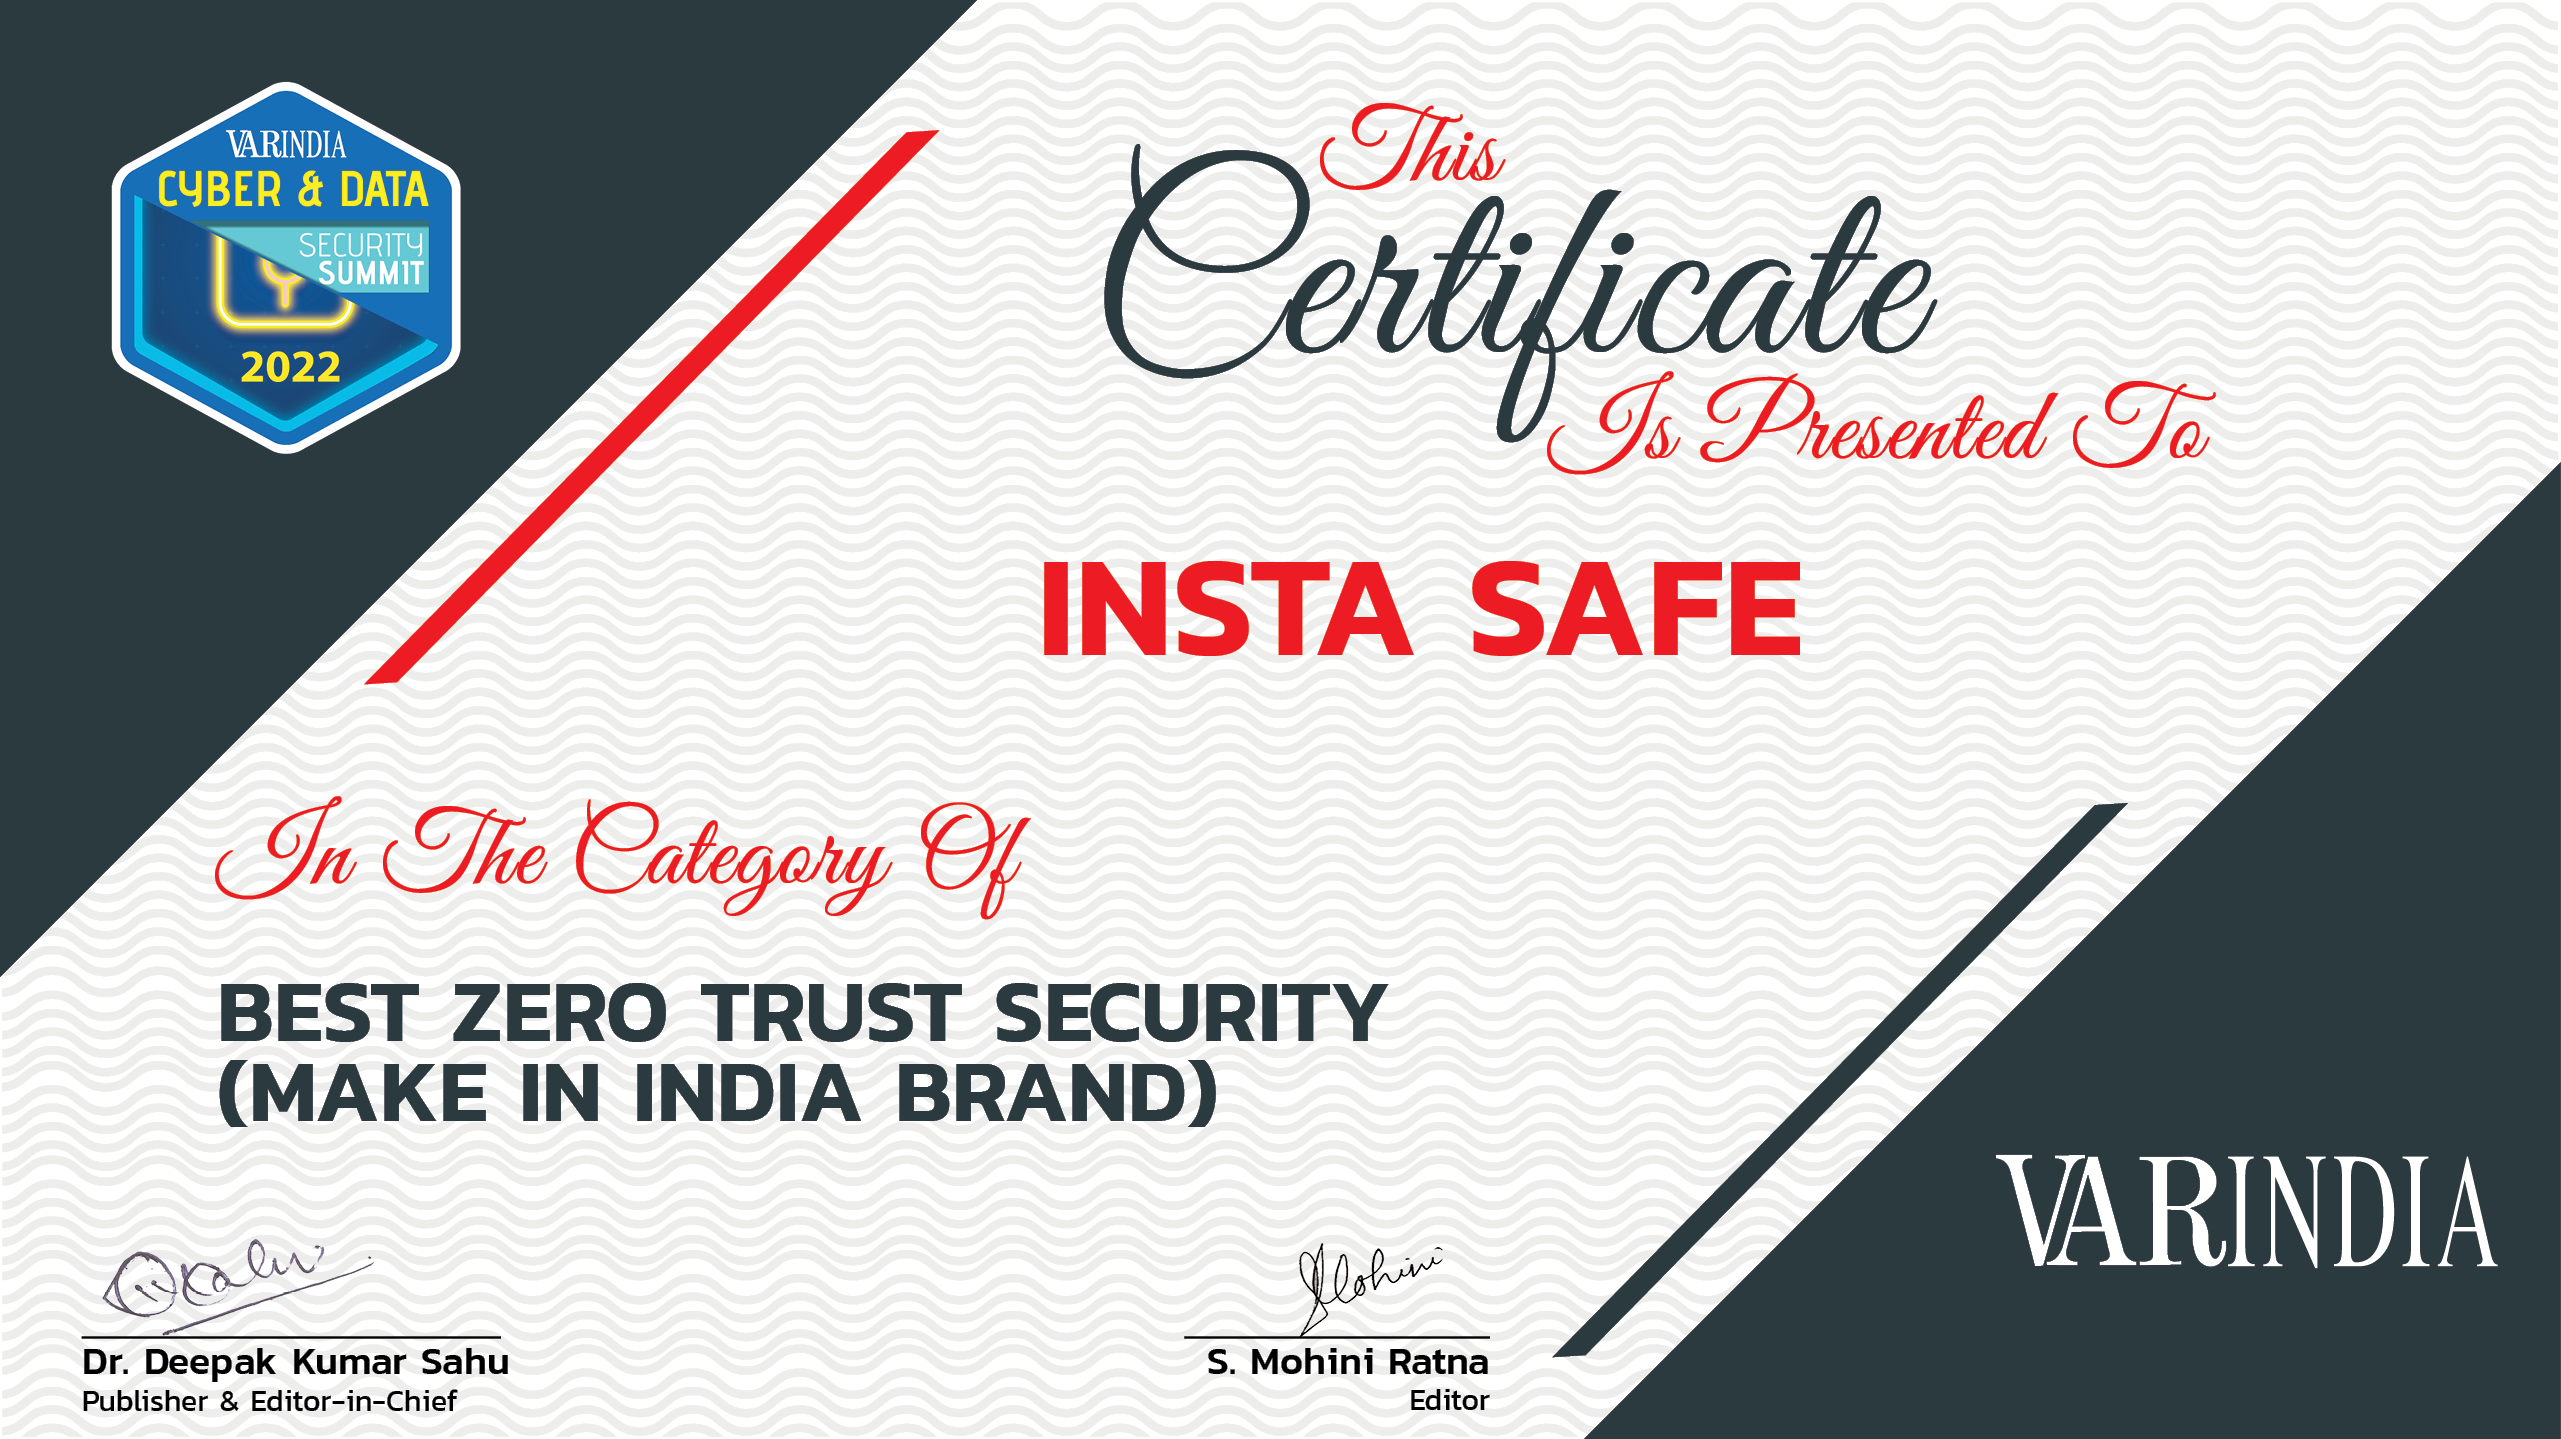 VARINDIA recognize Instasafe as Best Zero Trust Security Brand